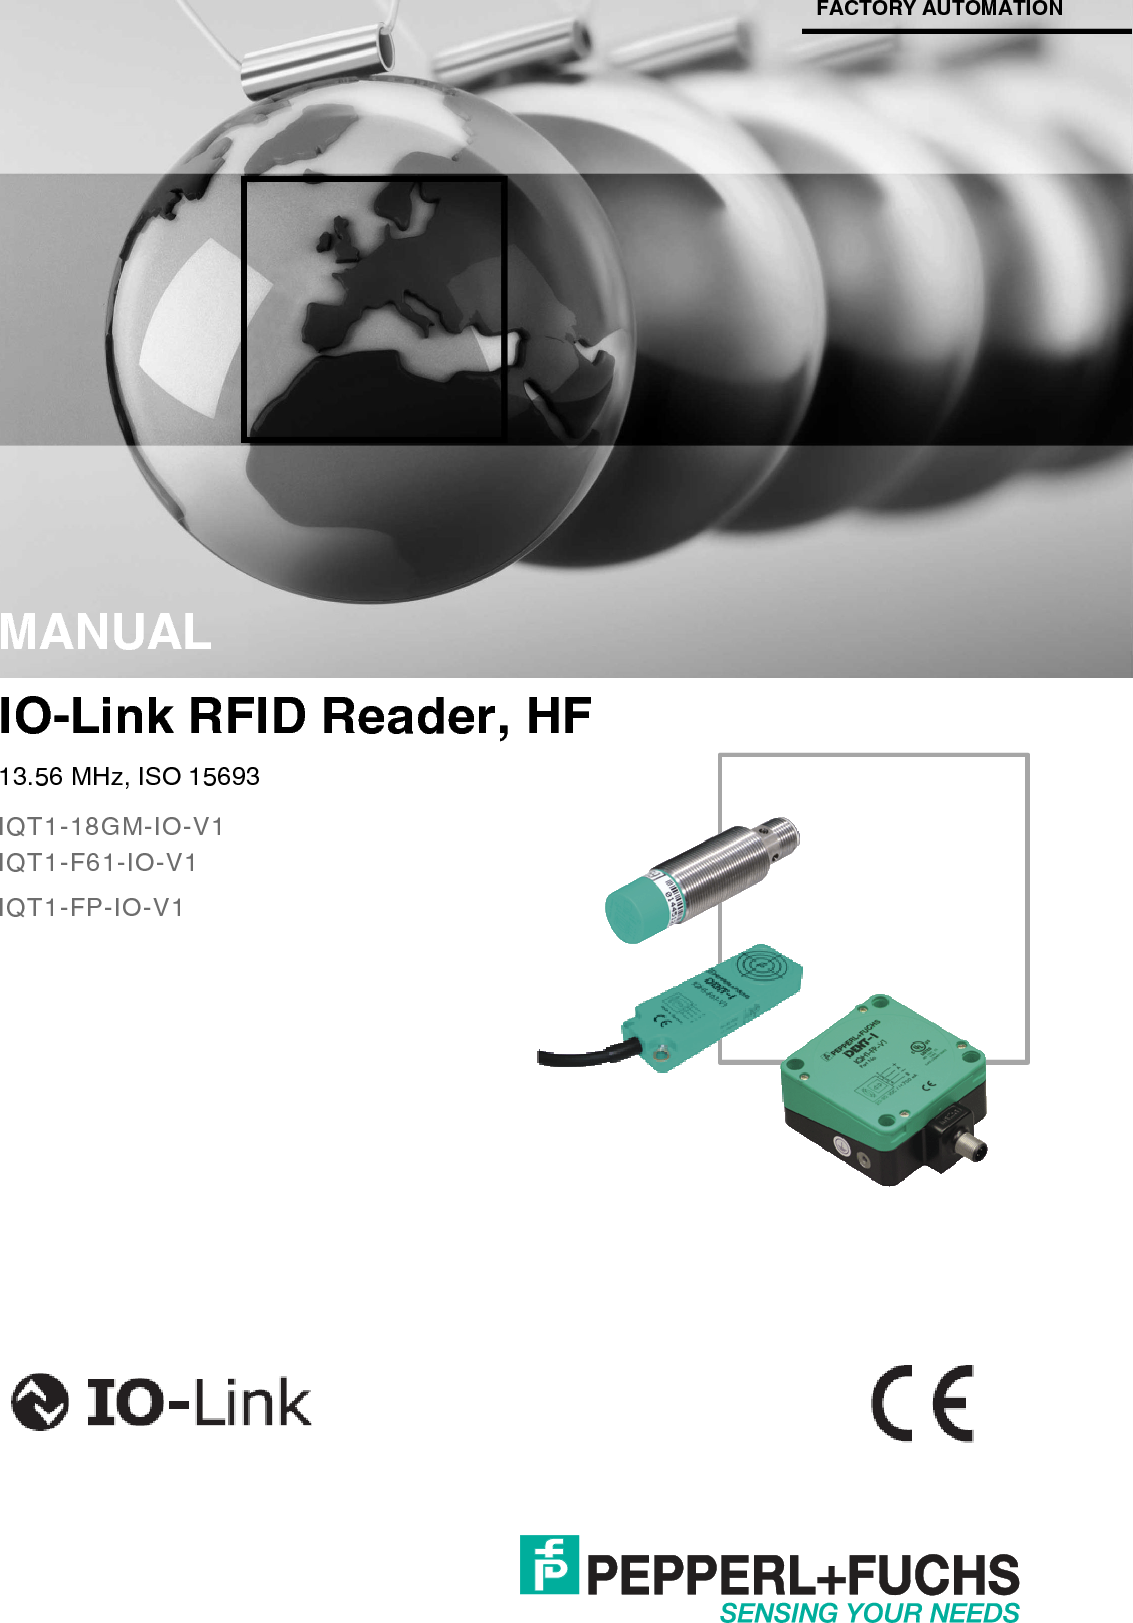                         MANUAL IO-Link RFID Reader, HF 13.56 MHz, ISO 15693 IQT1-18GM-IO-V1 IQT1-F61-IO-V1 IQT1-FP-IO-V1 FACTORY AUTOMATION 